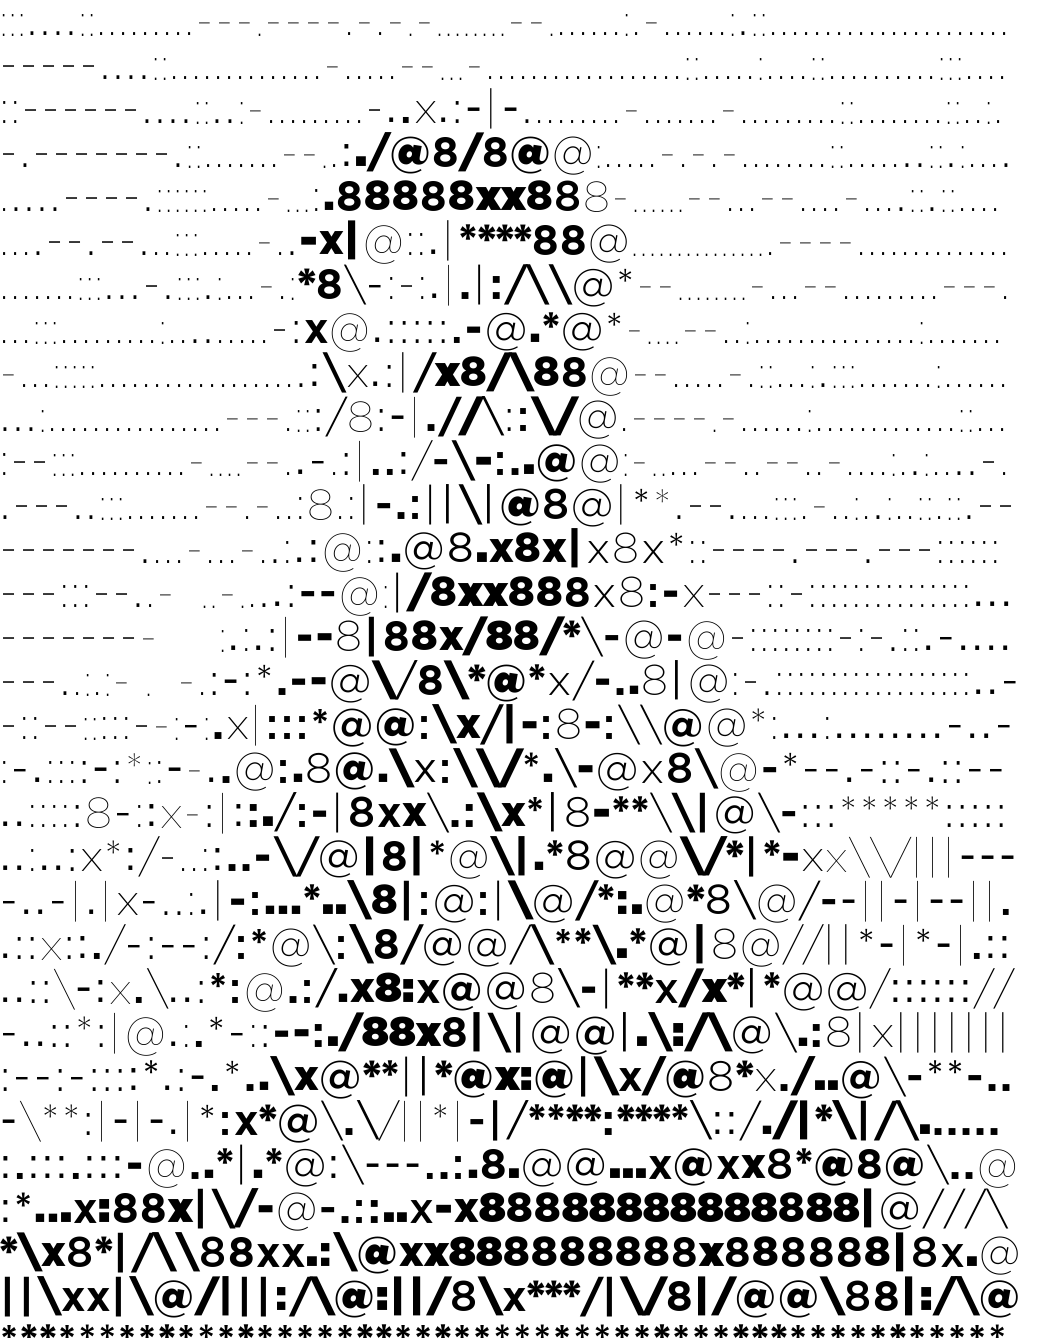 Christopher Hitchens - ASCII Art / Martin Krzywinski @MKrzywinski mkweb.bcgsc.ca